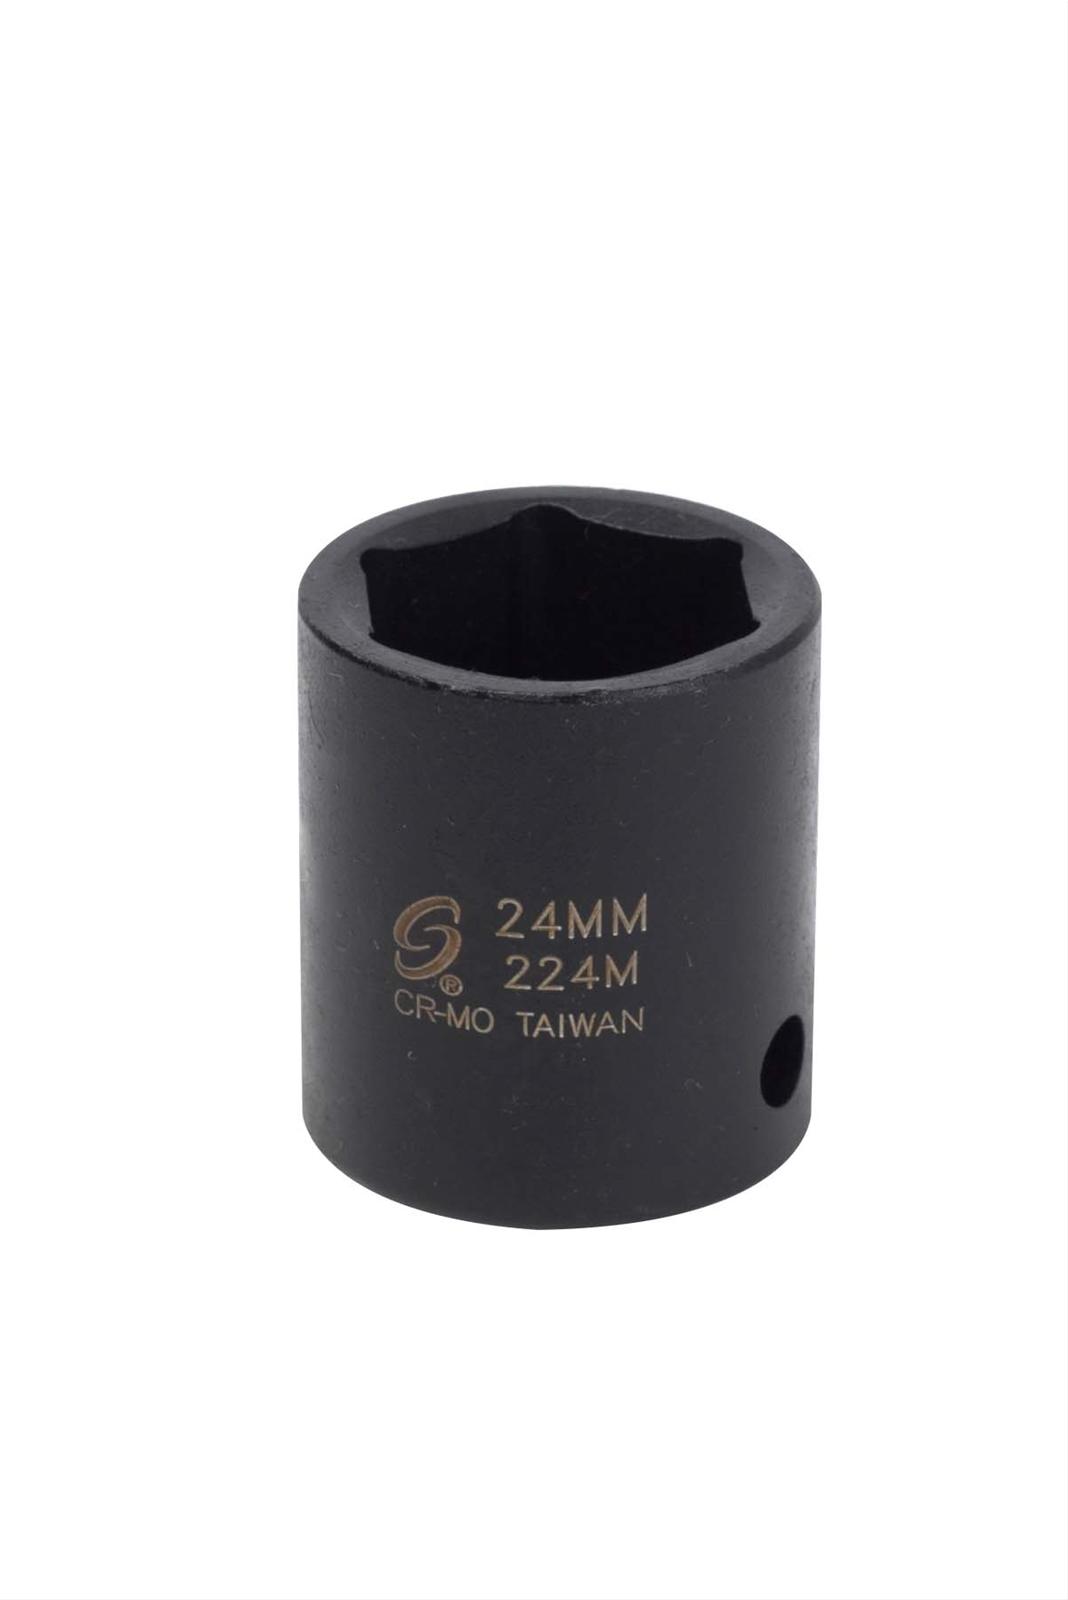 Sunex 224M 1/2" Dr 24mm Impact Socket 